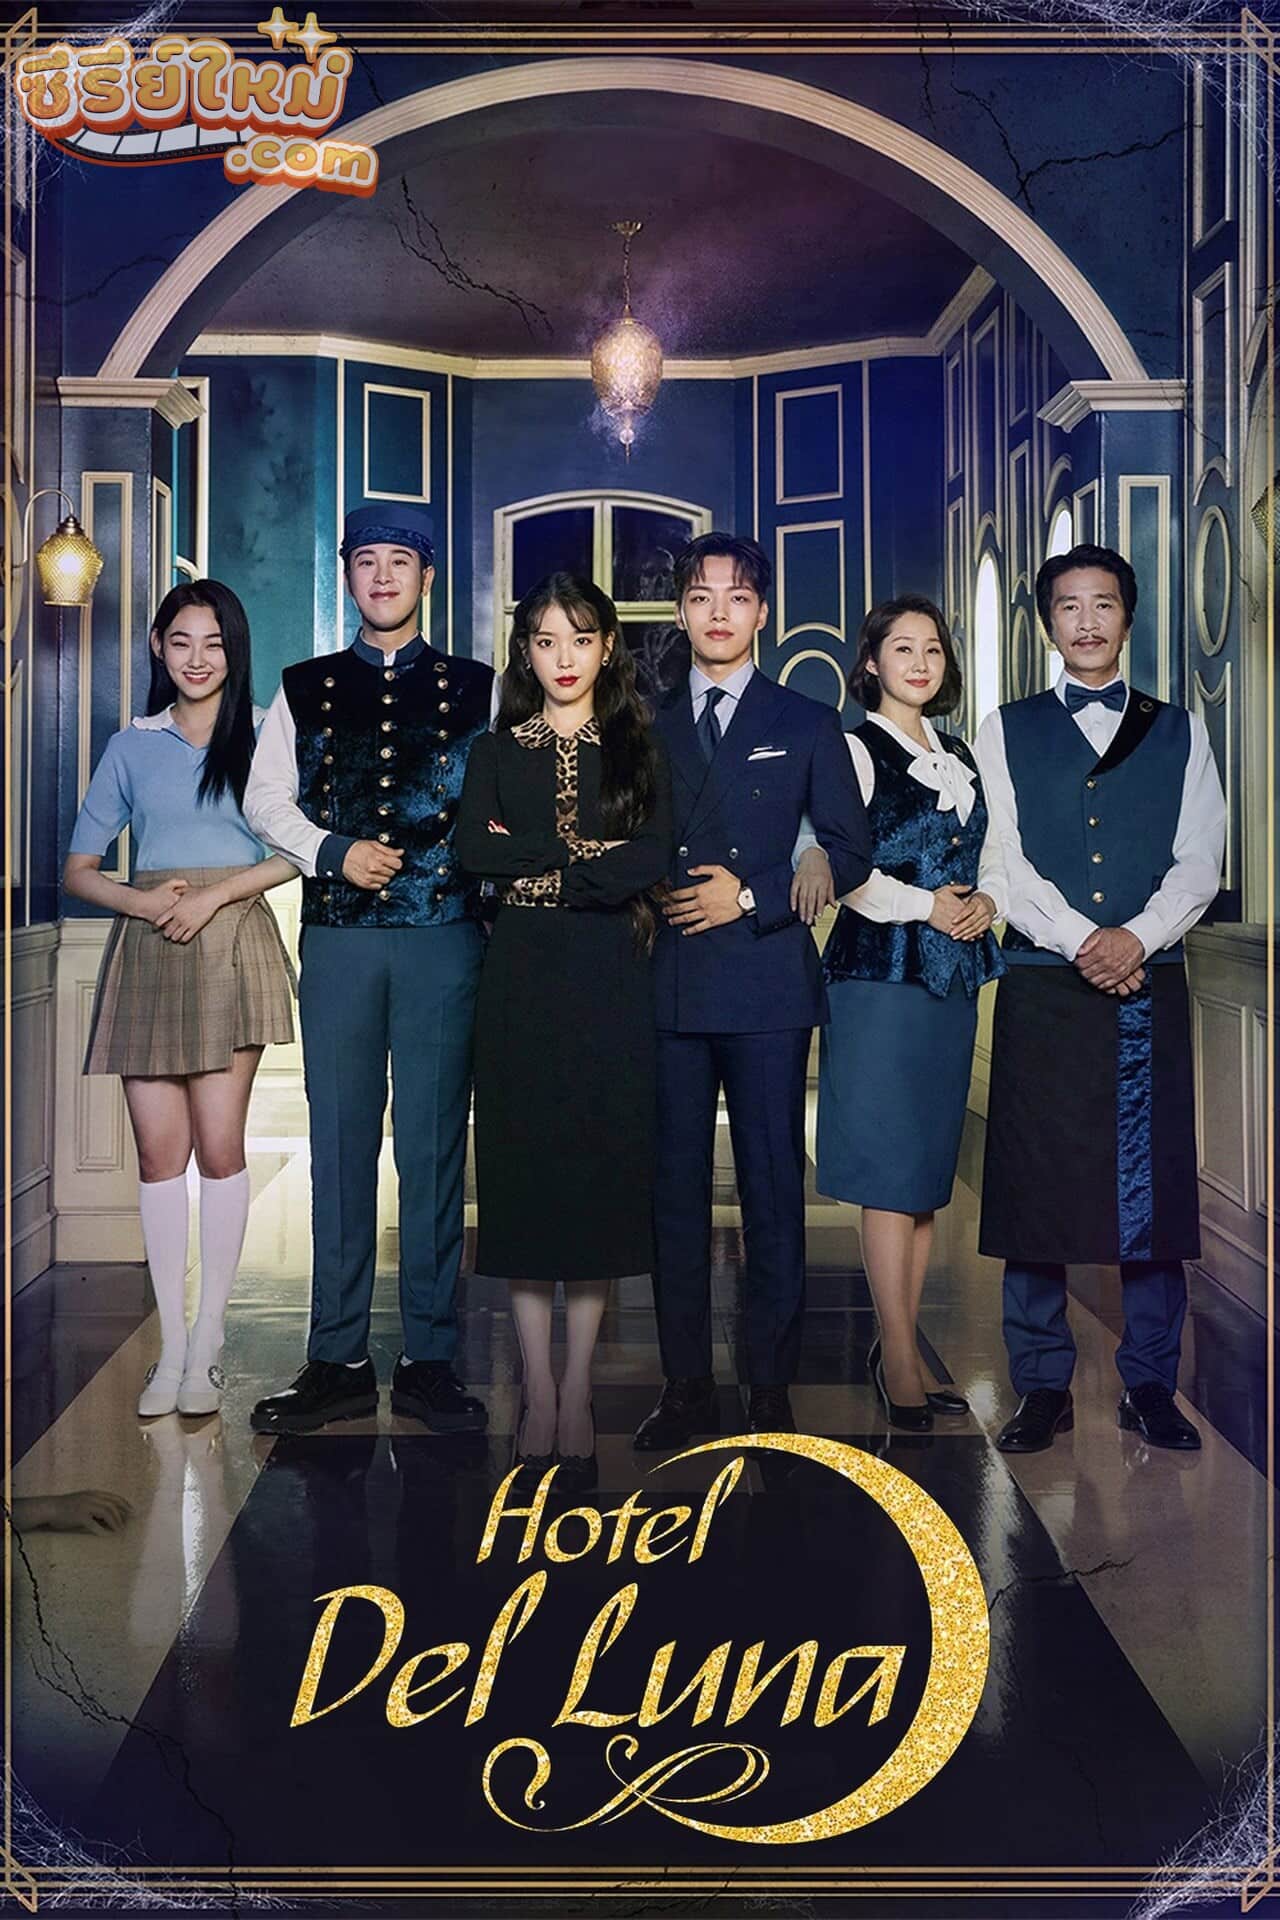 Hotel del Luna โรงแรมนี้มี ผี เป็นลูกค้า (2019)